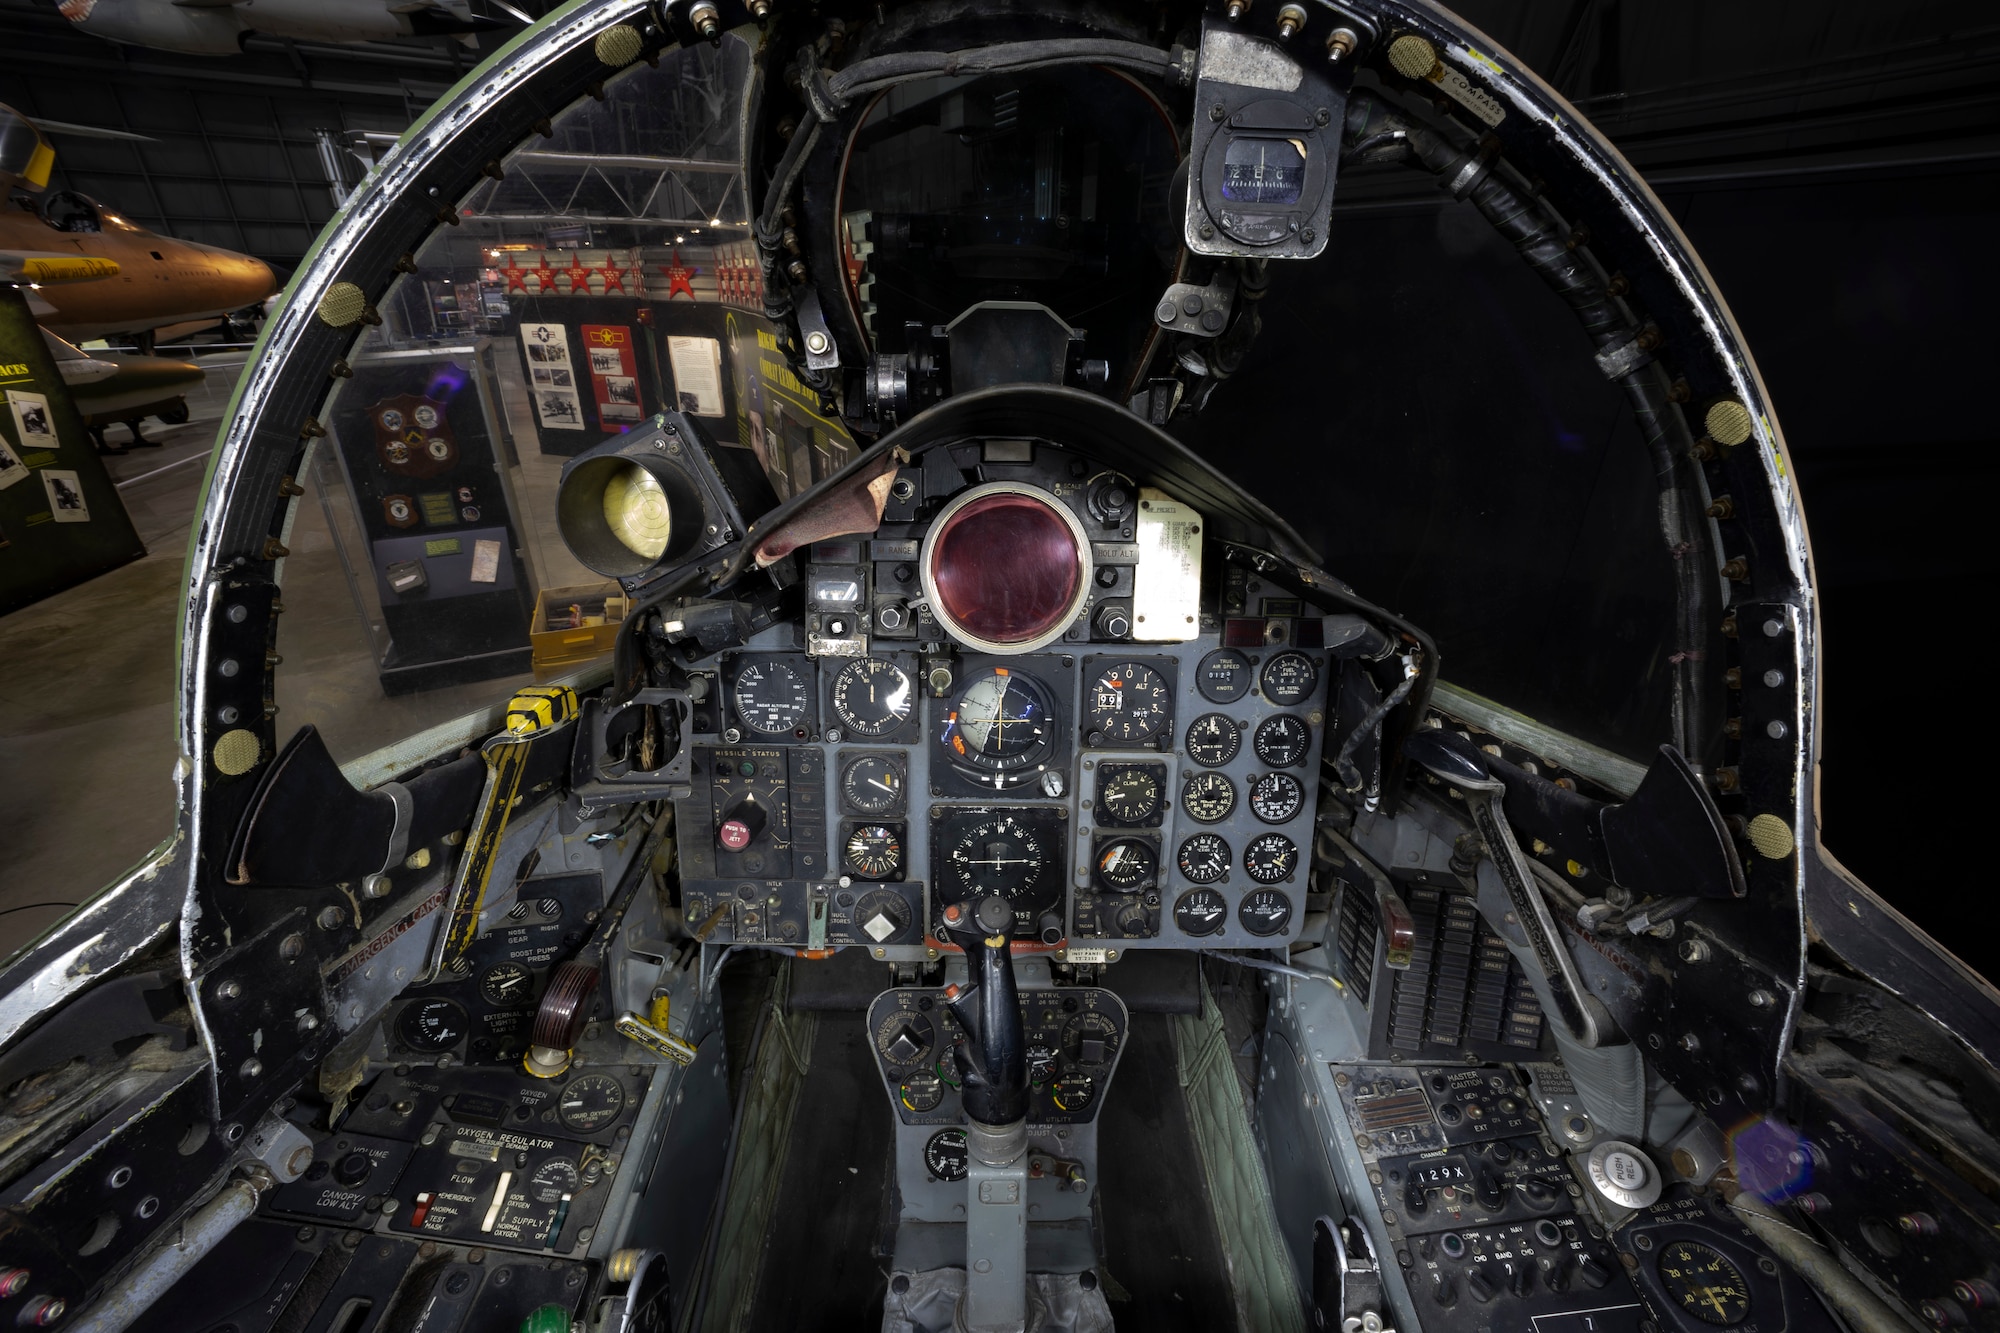 Cockopit view of the McDonnel Douglas F-4C Phantom II